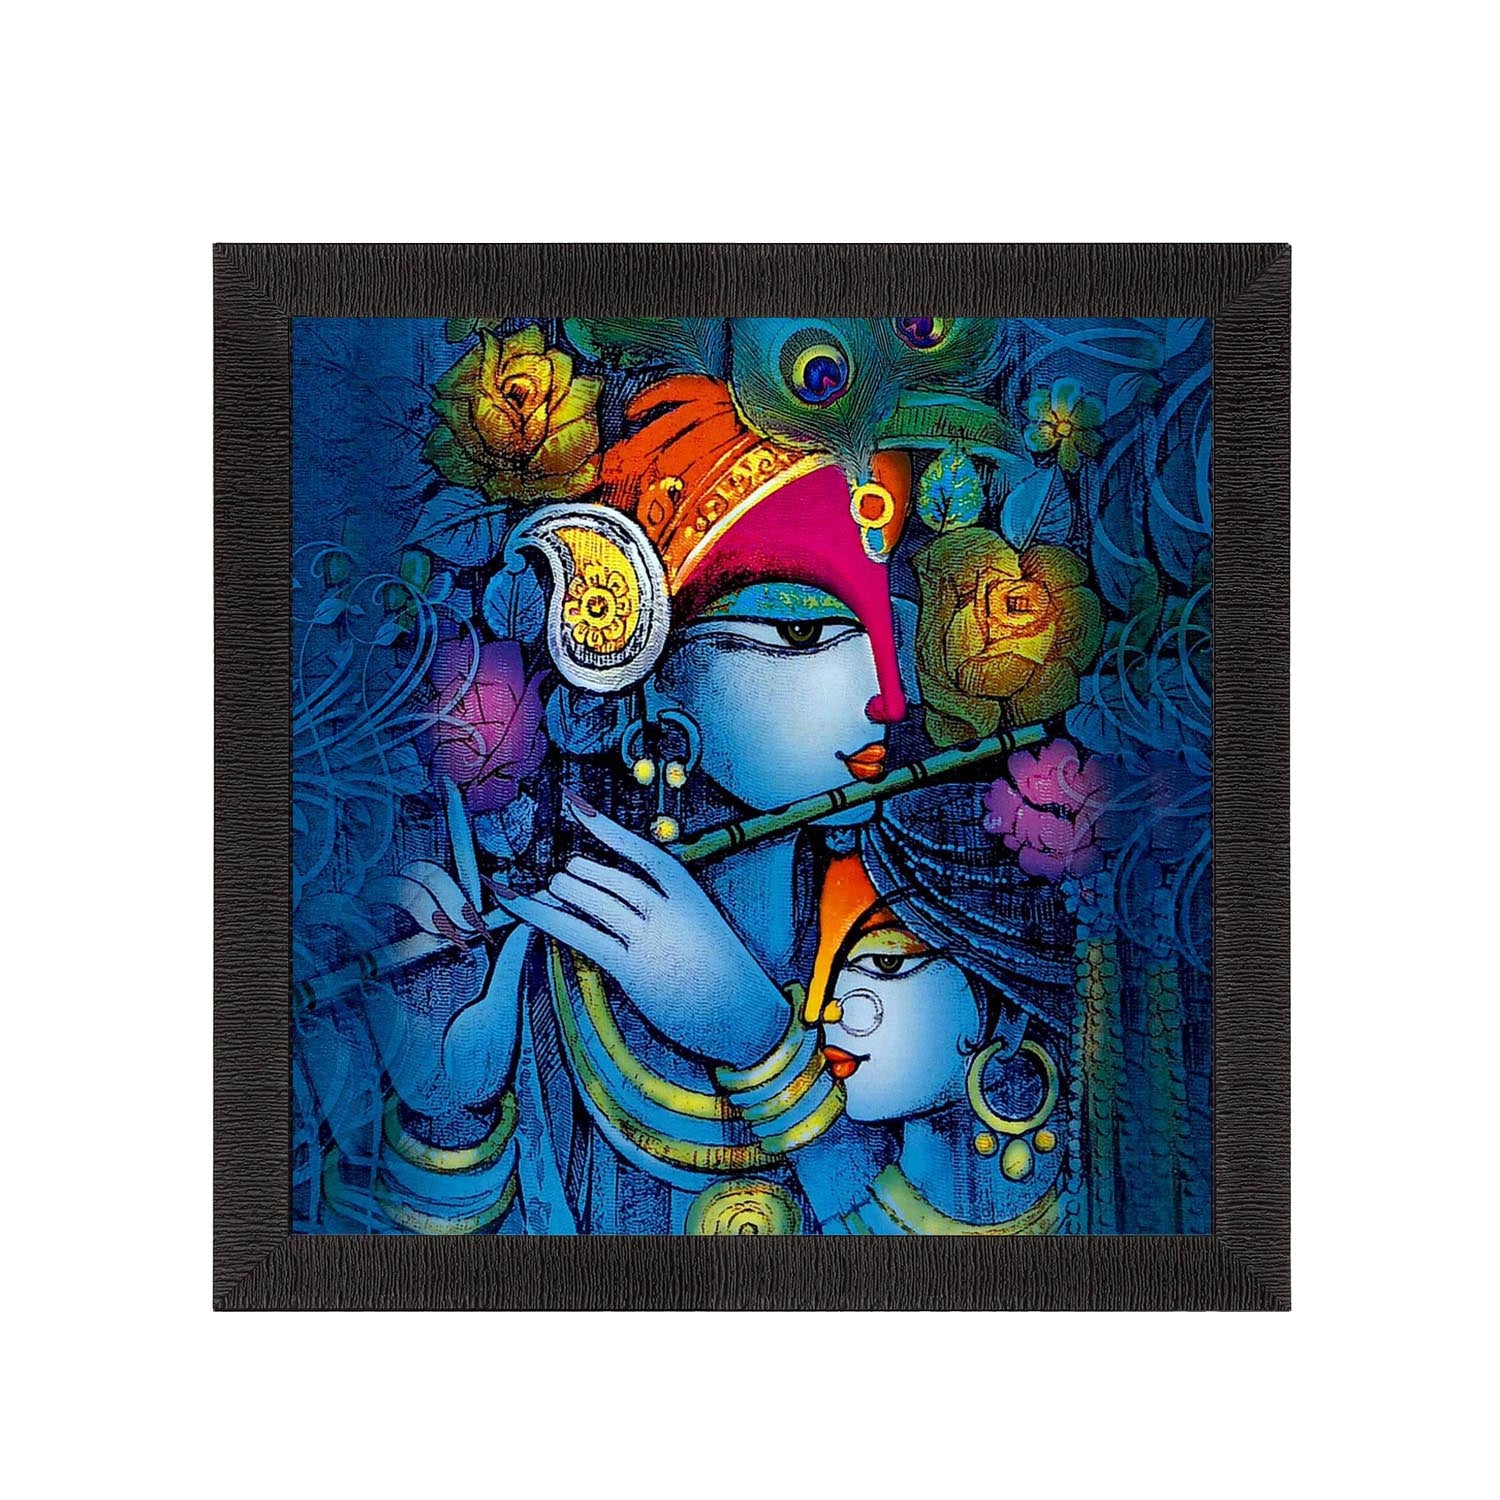 Beautiful Radha Krishna Painting Digital Printed Religious Wall Art